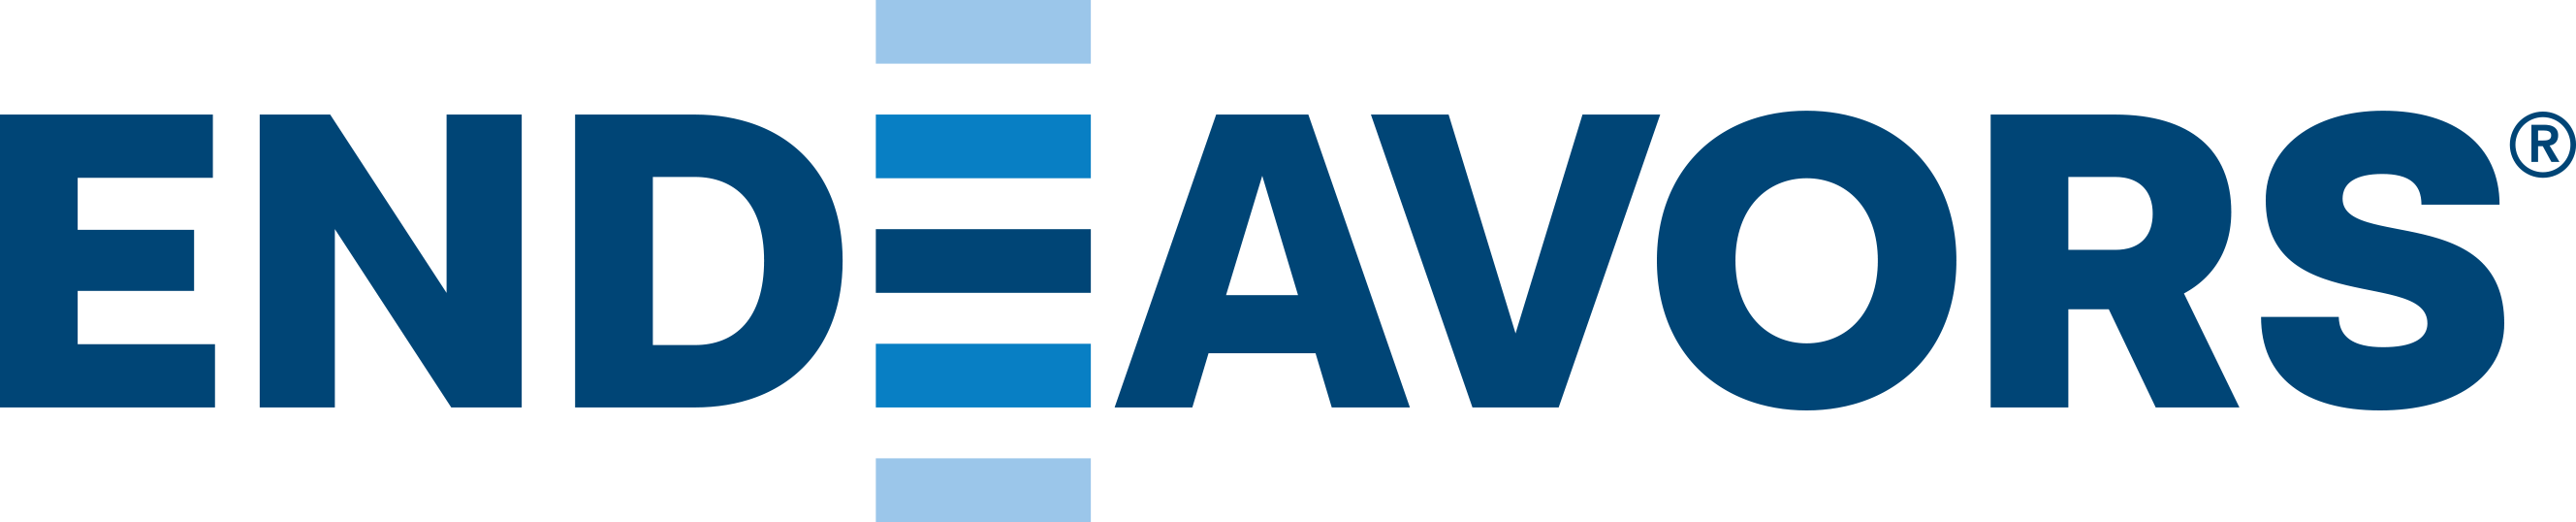 Endeavors logo